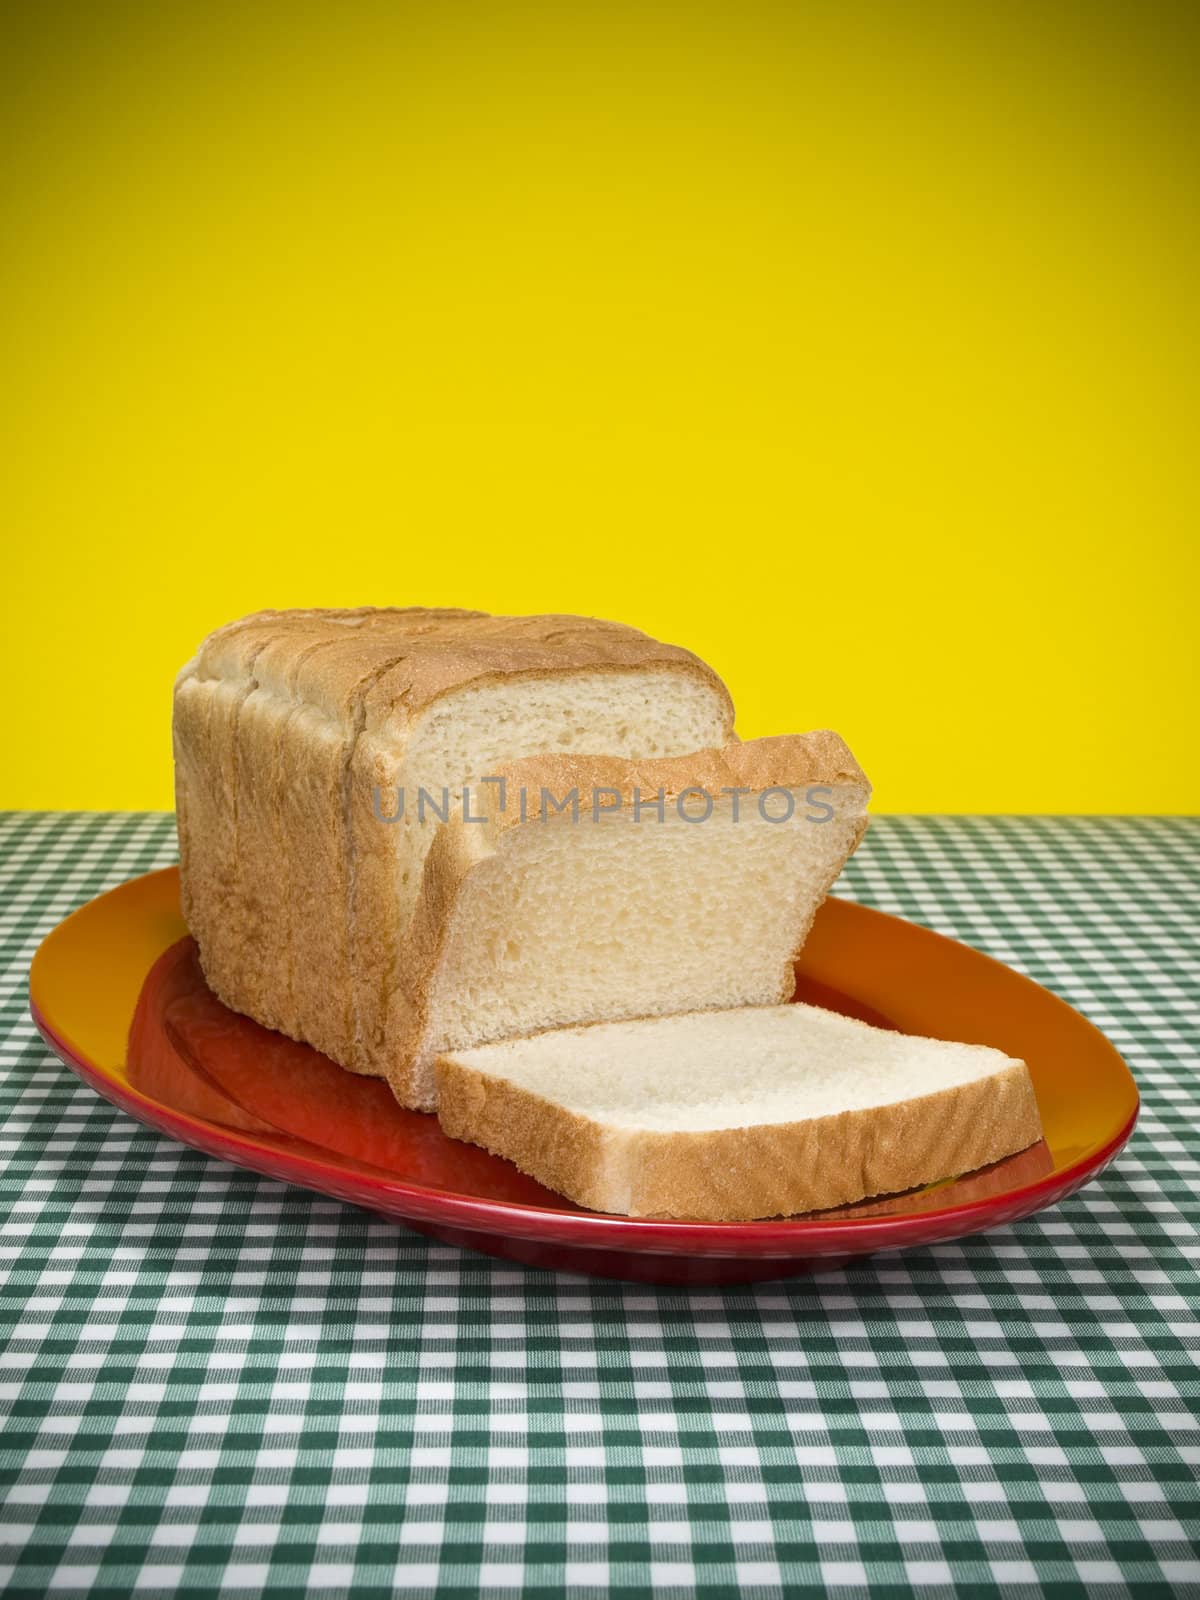 Sliced bread by antonprado